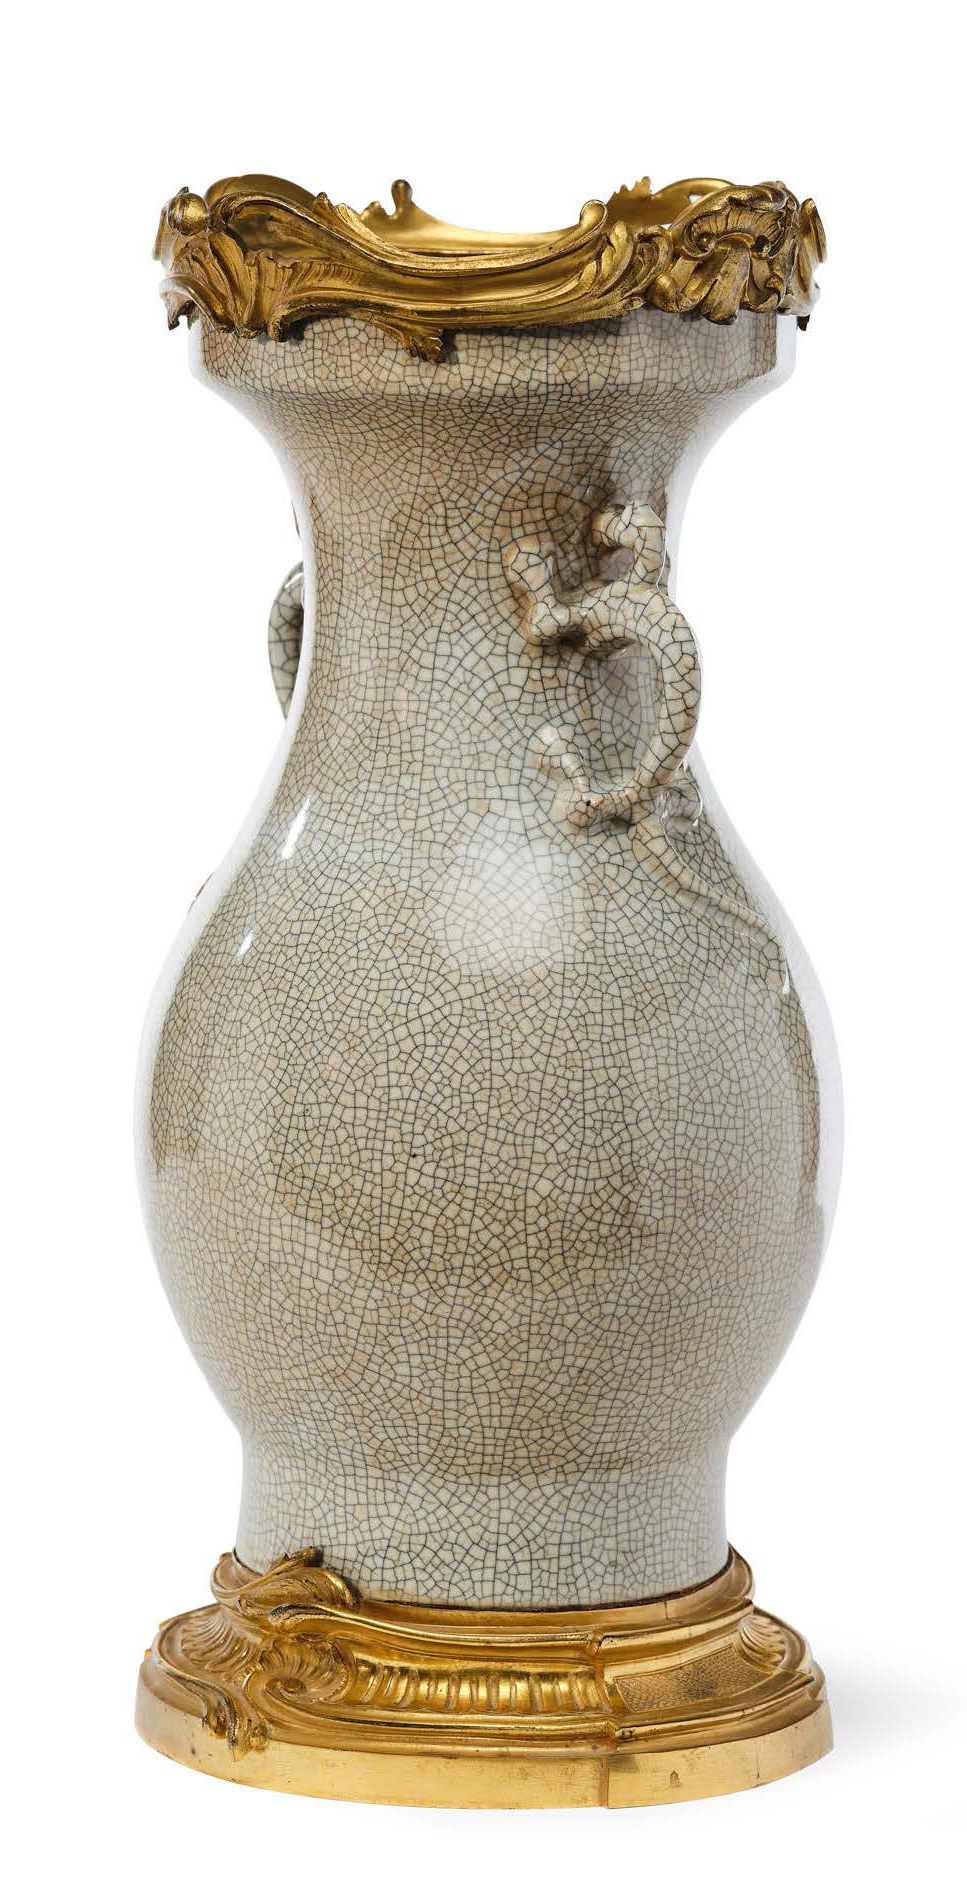 Null 一个罕见的中国裂纹或 "truitée "瓷器巴鲁斯特拉瓶，手柄为蜥蜴形状。它被放置在一个带有运河和刺桐叶的铜制凹槽和镀金底座上。颈部被一个带有刺绣叶&hellip;